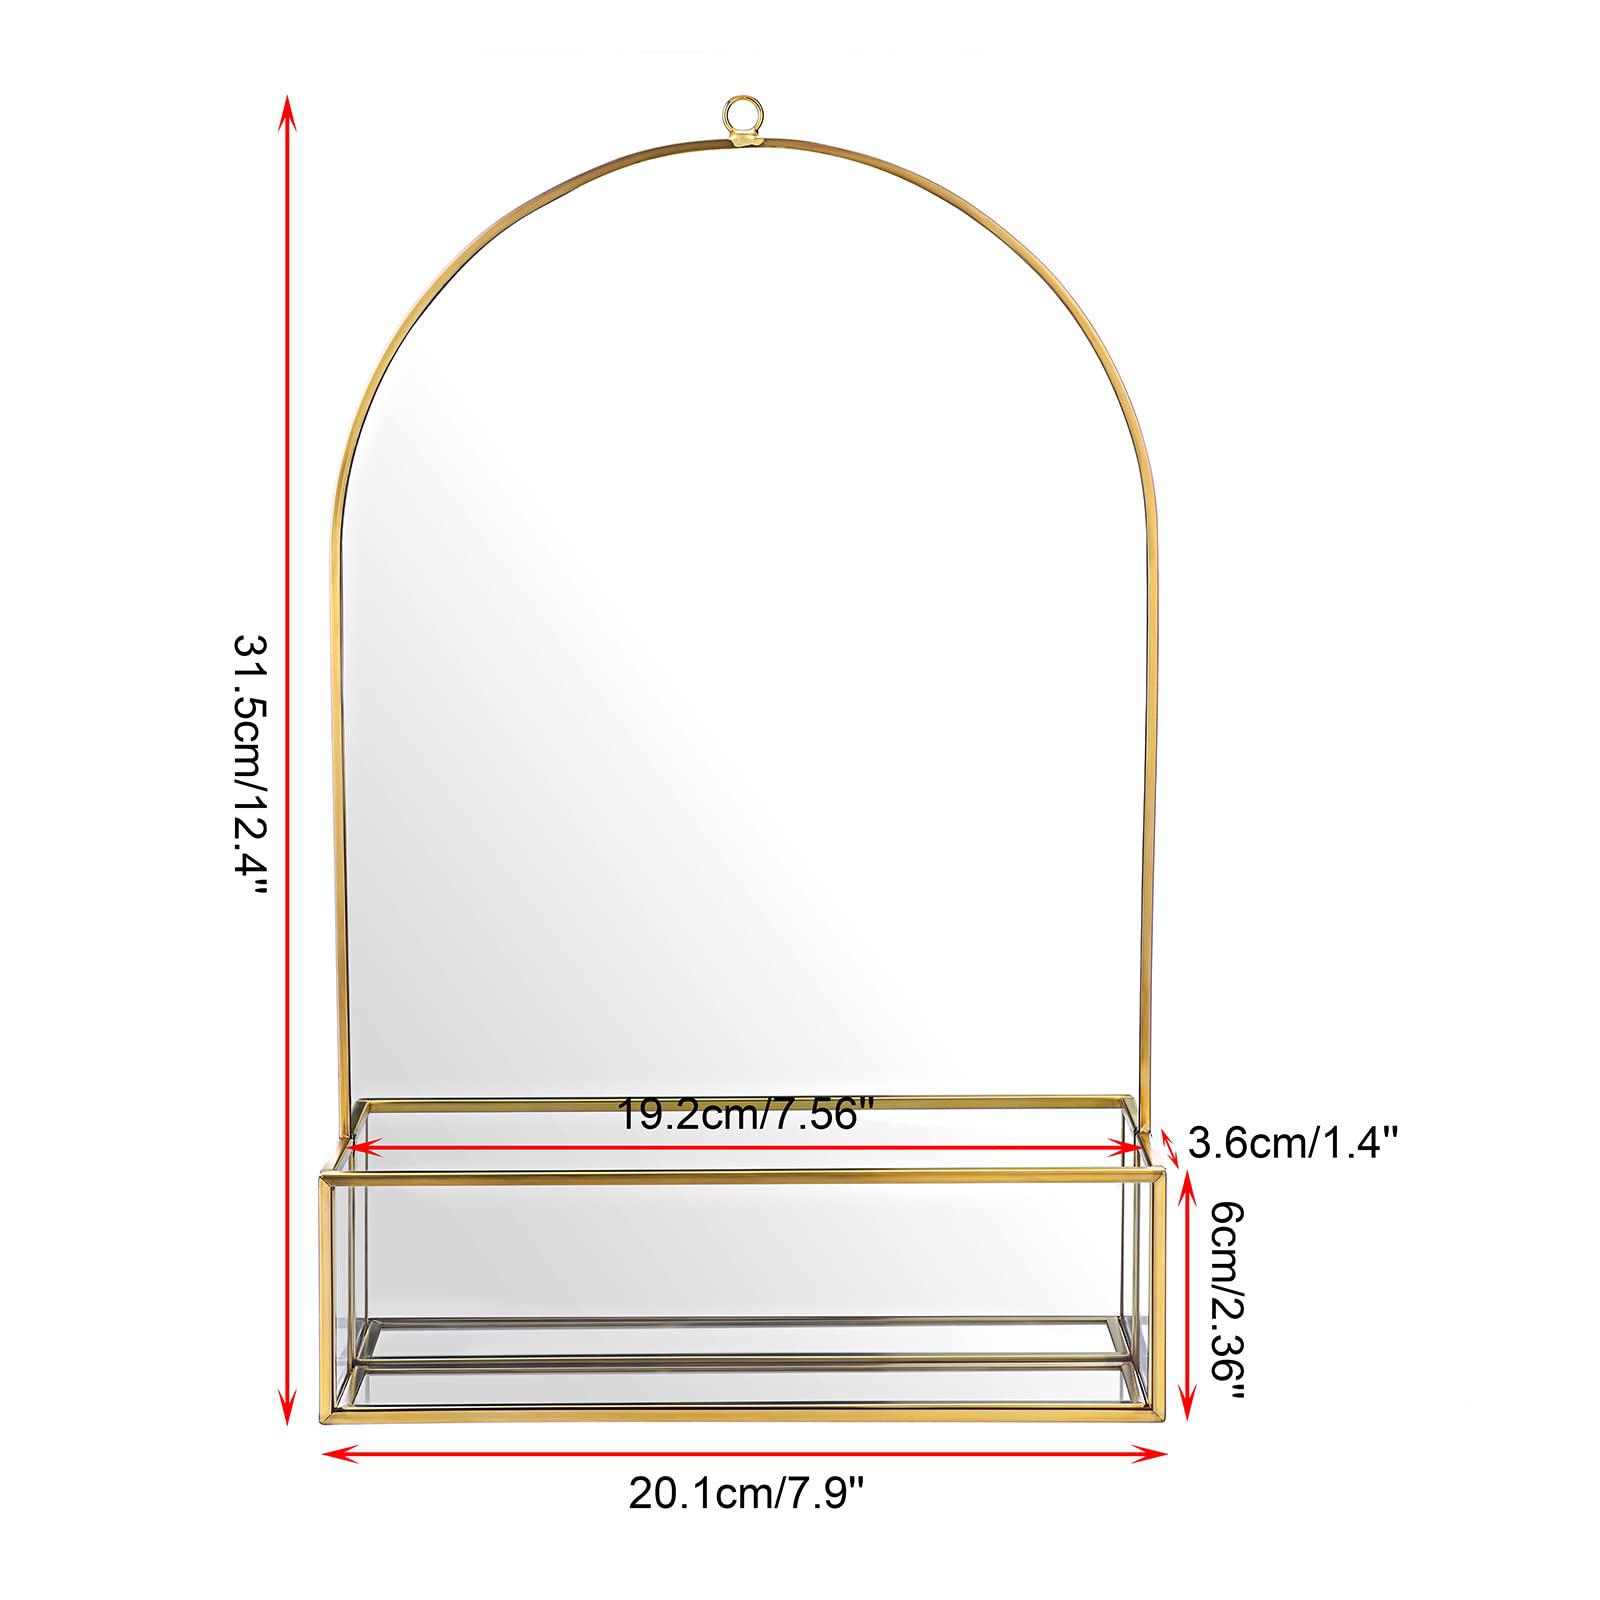 juxyes 11.8 x 7.87 inches brass frame wall hanging mirror with storage shelf, golden arc metal frame modern geometry mirror w